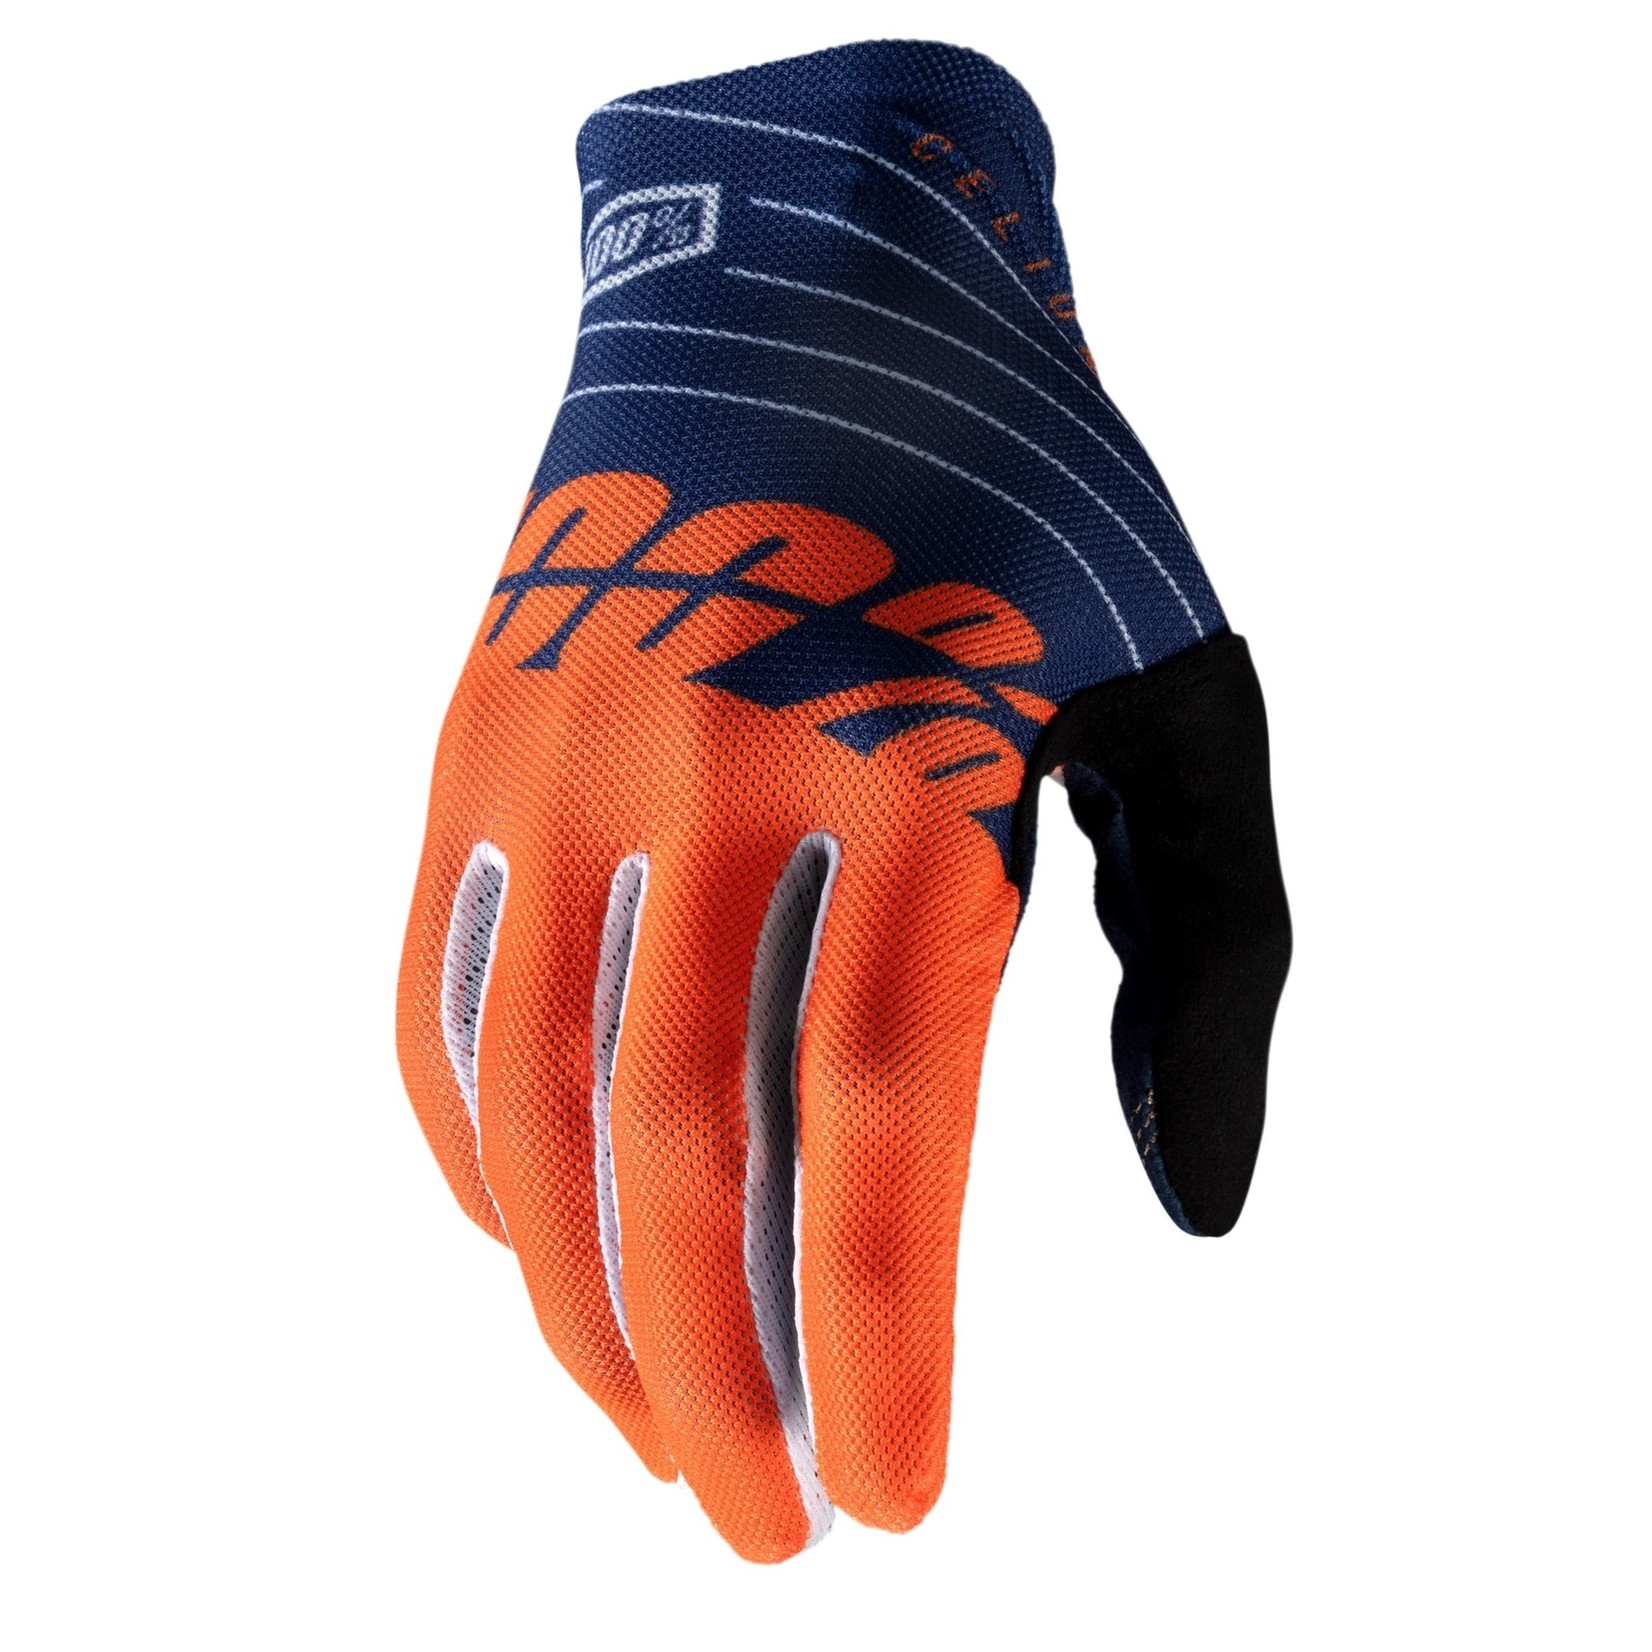 100% CELIUM Cycling Gloves - Navy/Orange